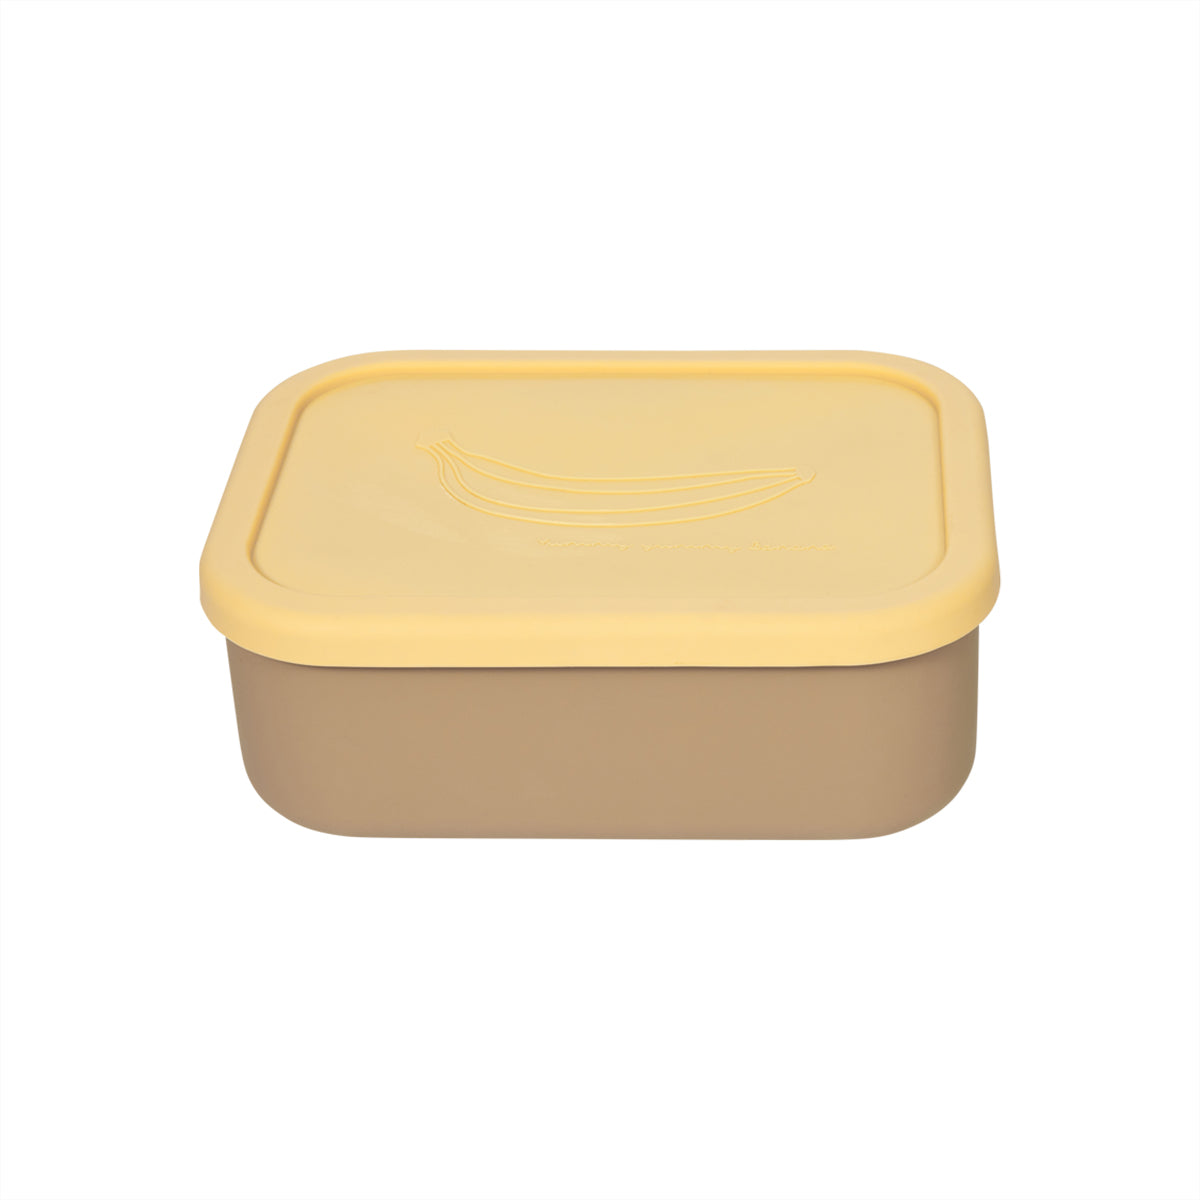 OYOY MINI Yummy Lunch Box - Large Lunch Box 302 Camel / Yellow